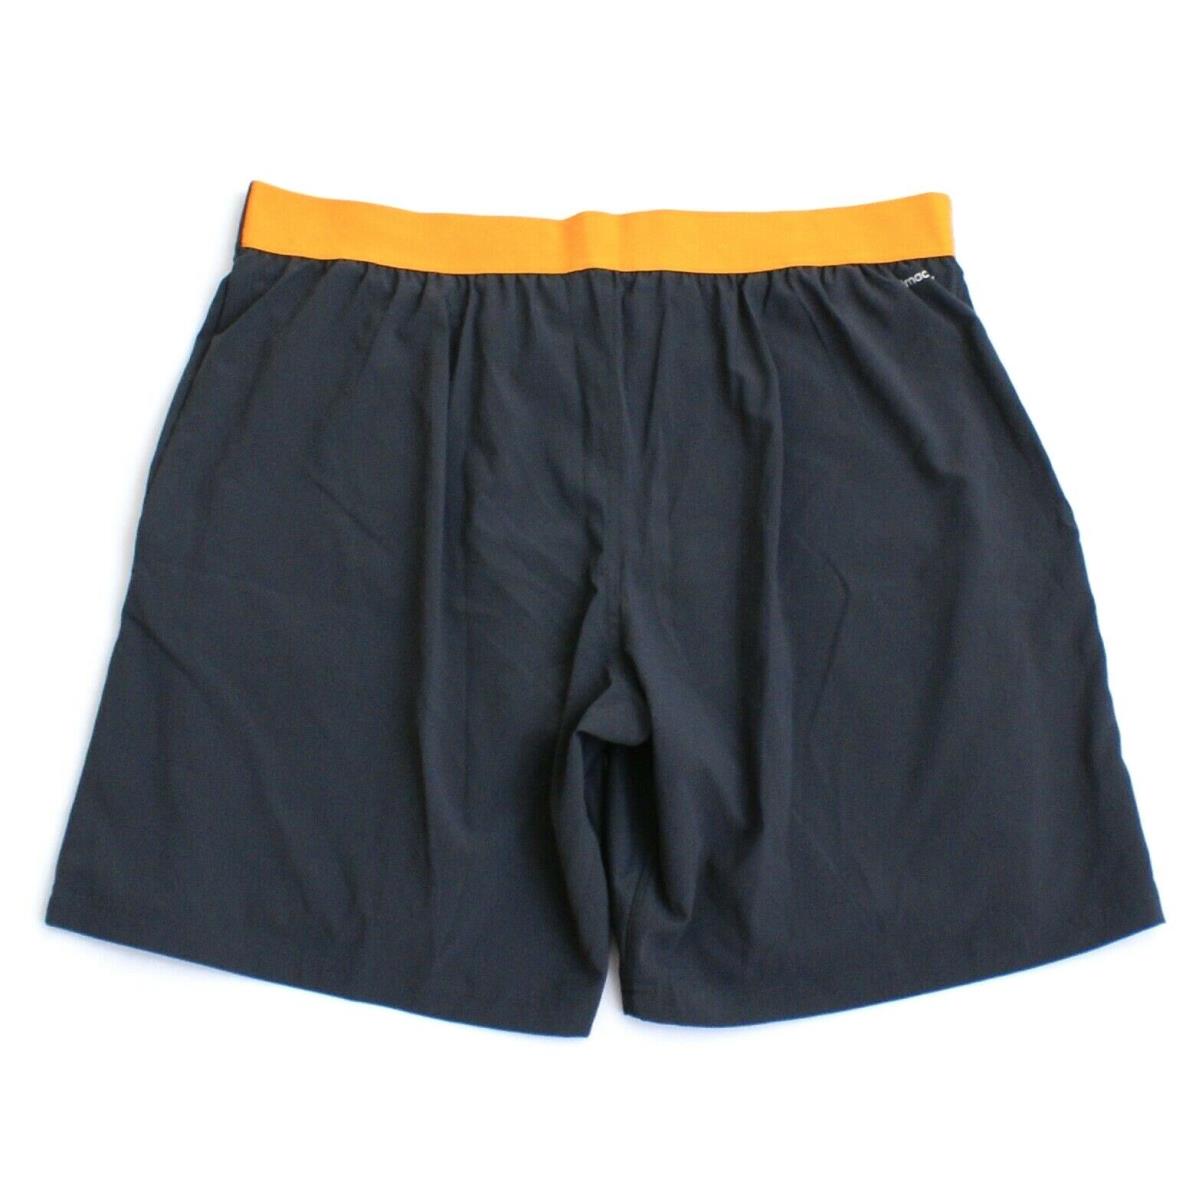 Adidas Adizero Climacool Gray Orange Attached Jammer Tennis Shorts Men`s